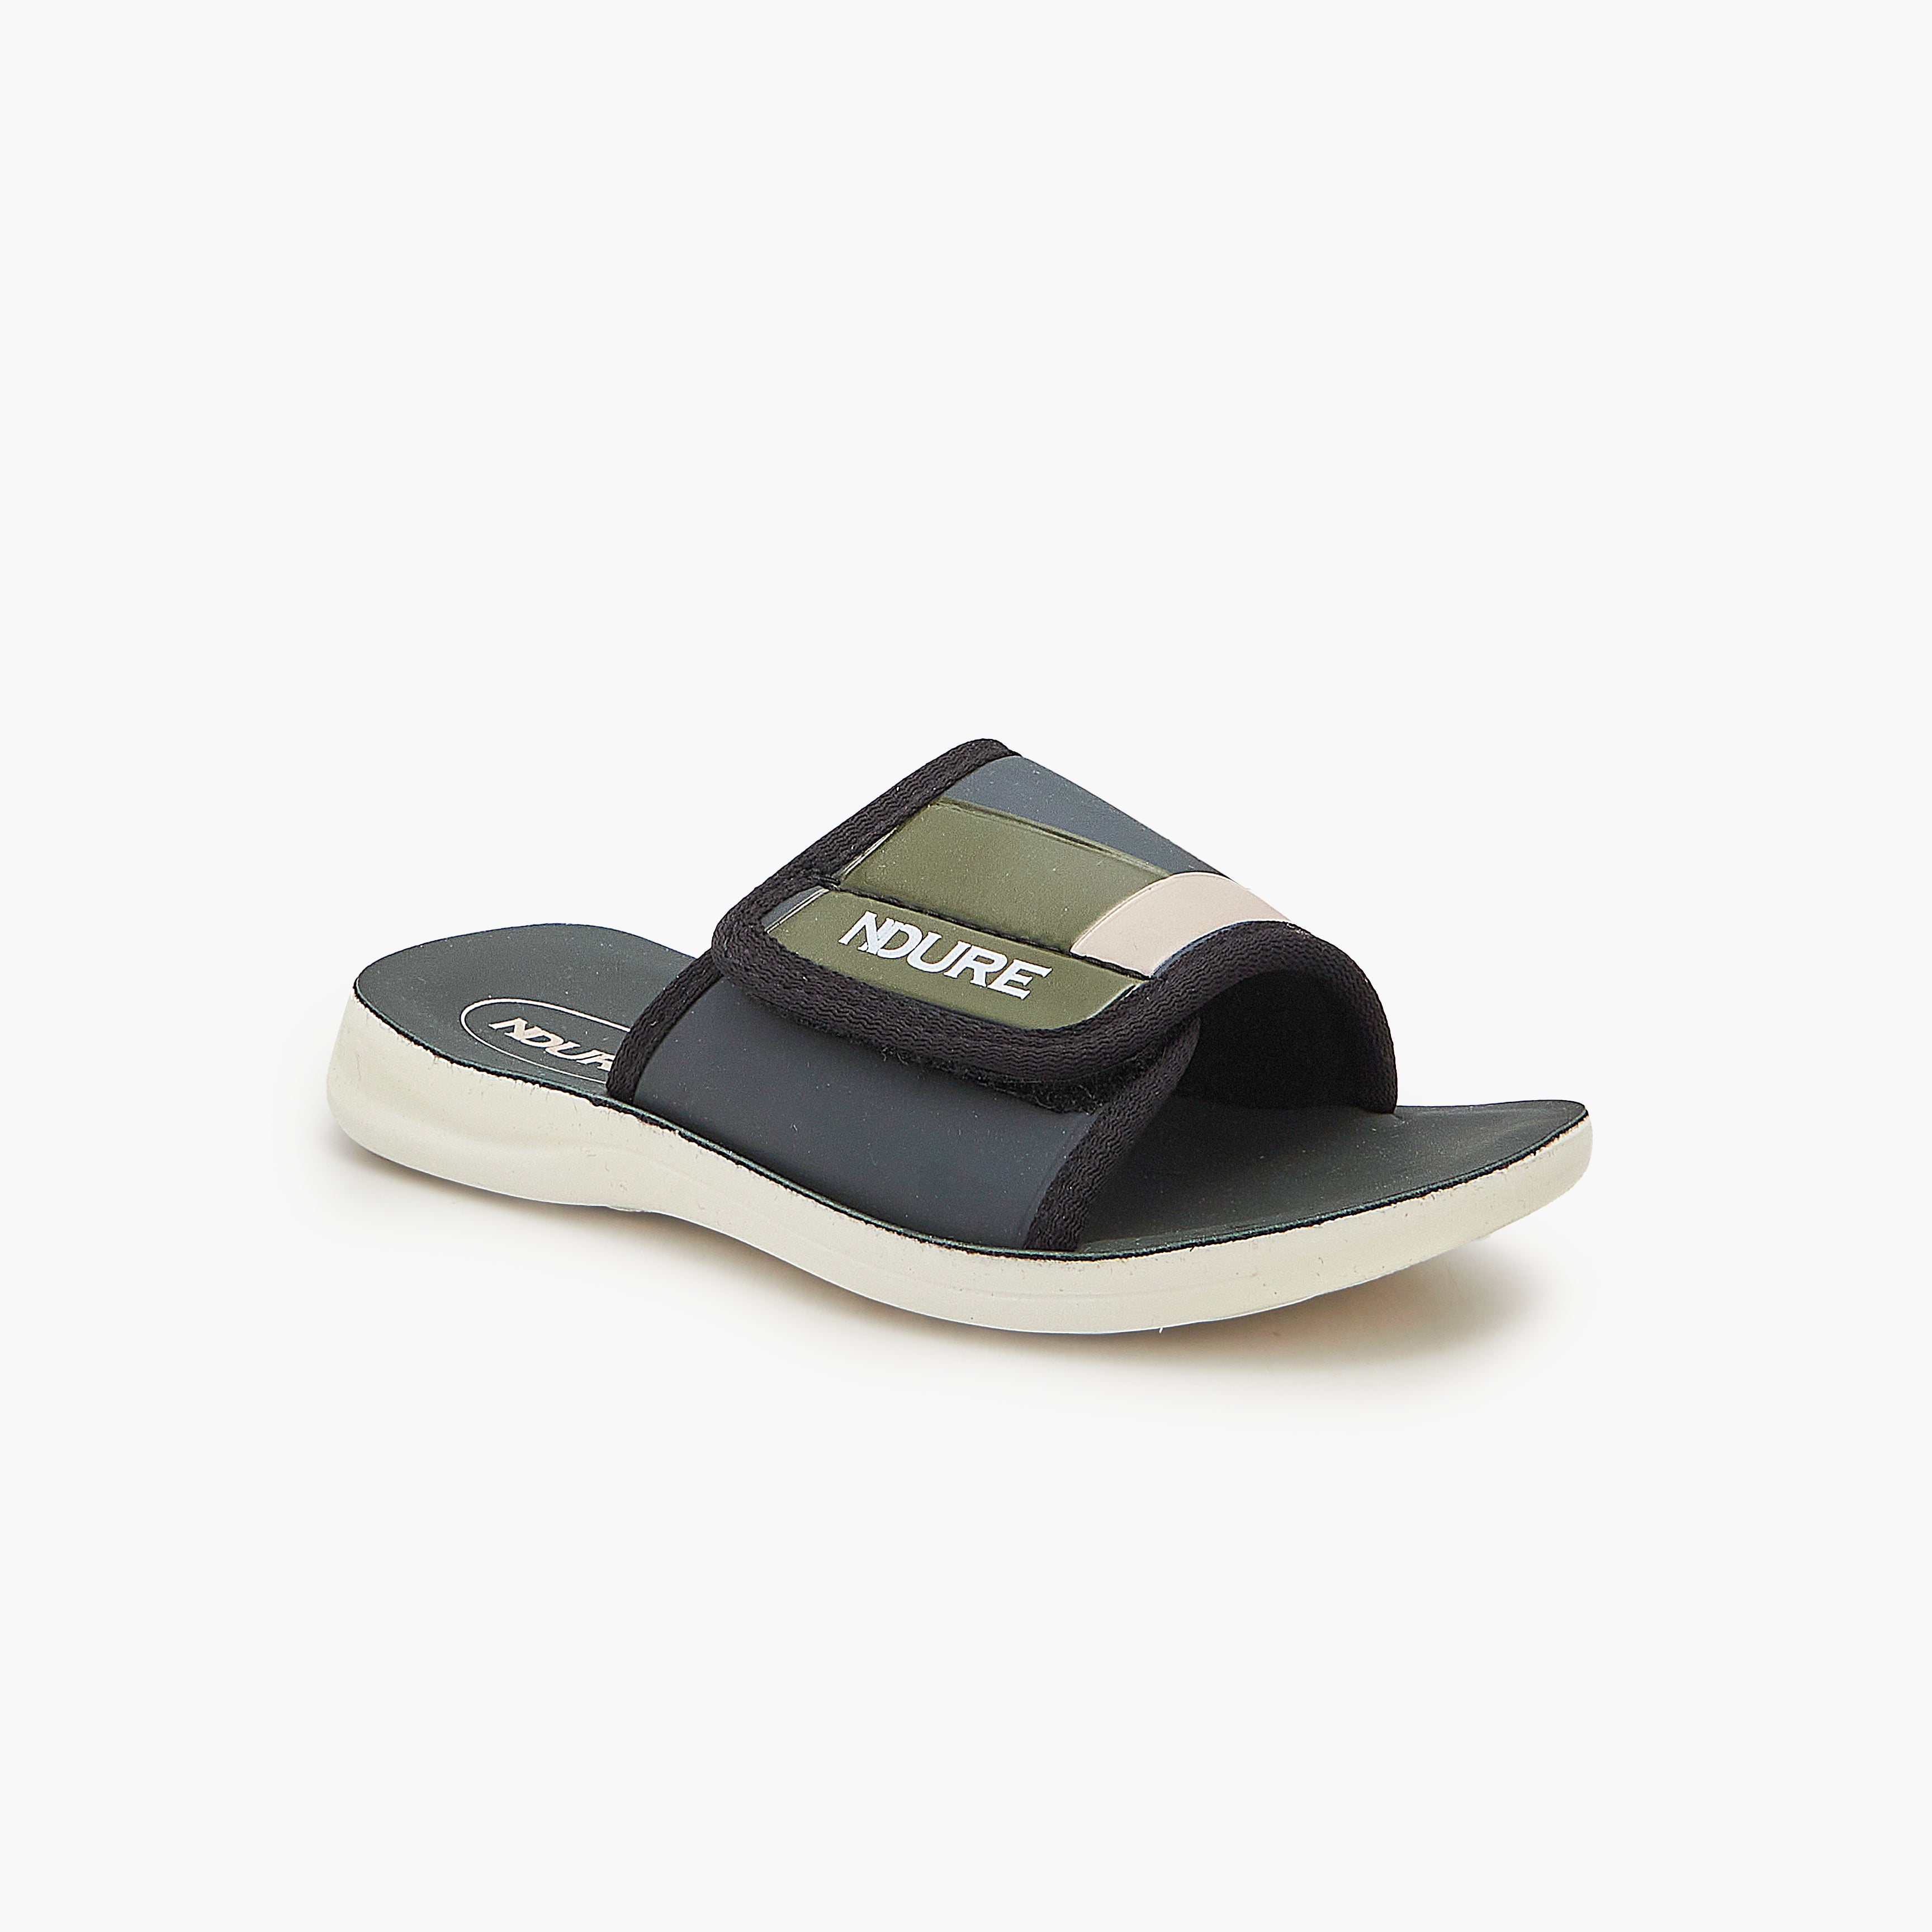 Buy Boys Tan Casual Slippers Online | SKU: 47-4607-23-31-Metro Shoes